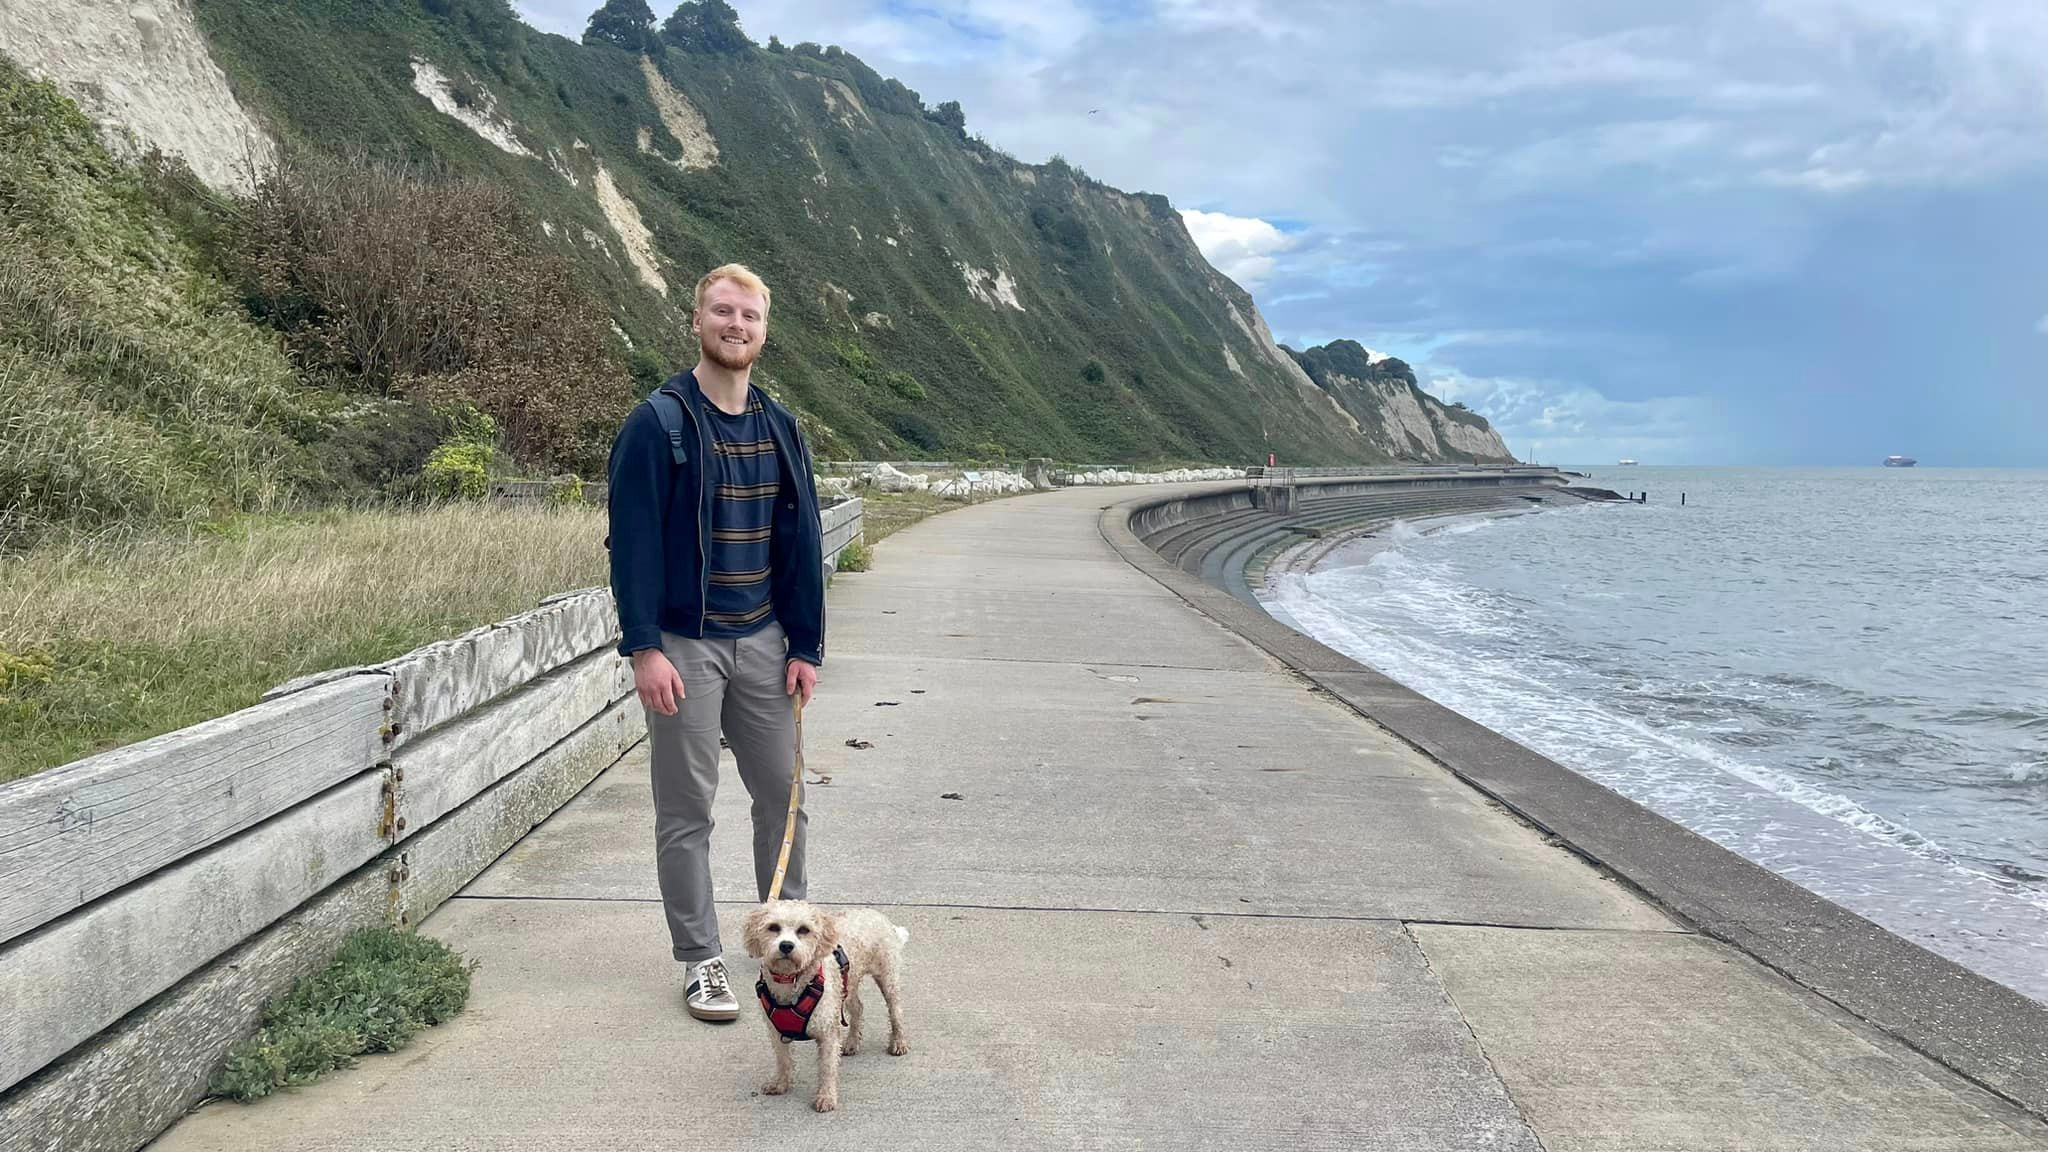 TechRadar fitness writer Harry Bullmore walking with his dog